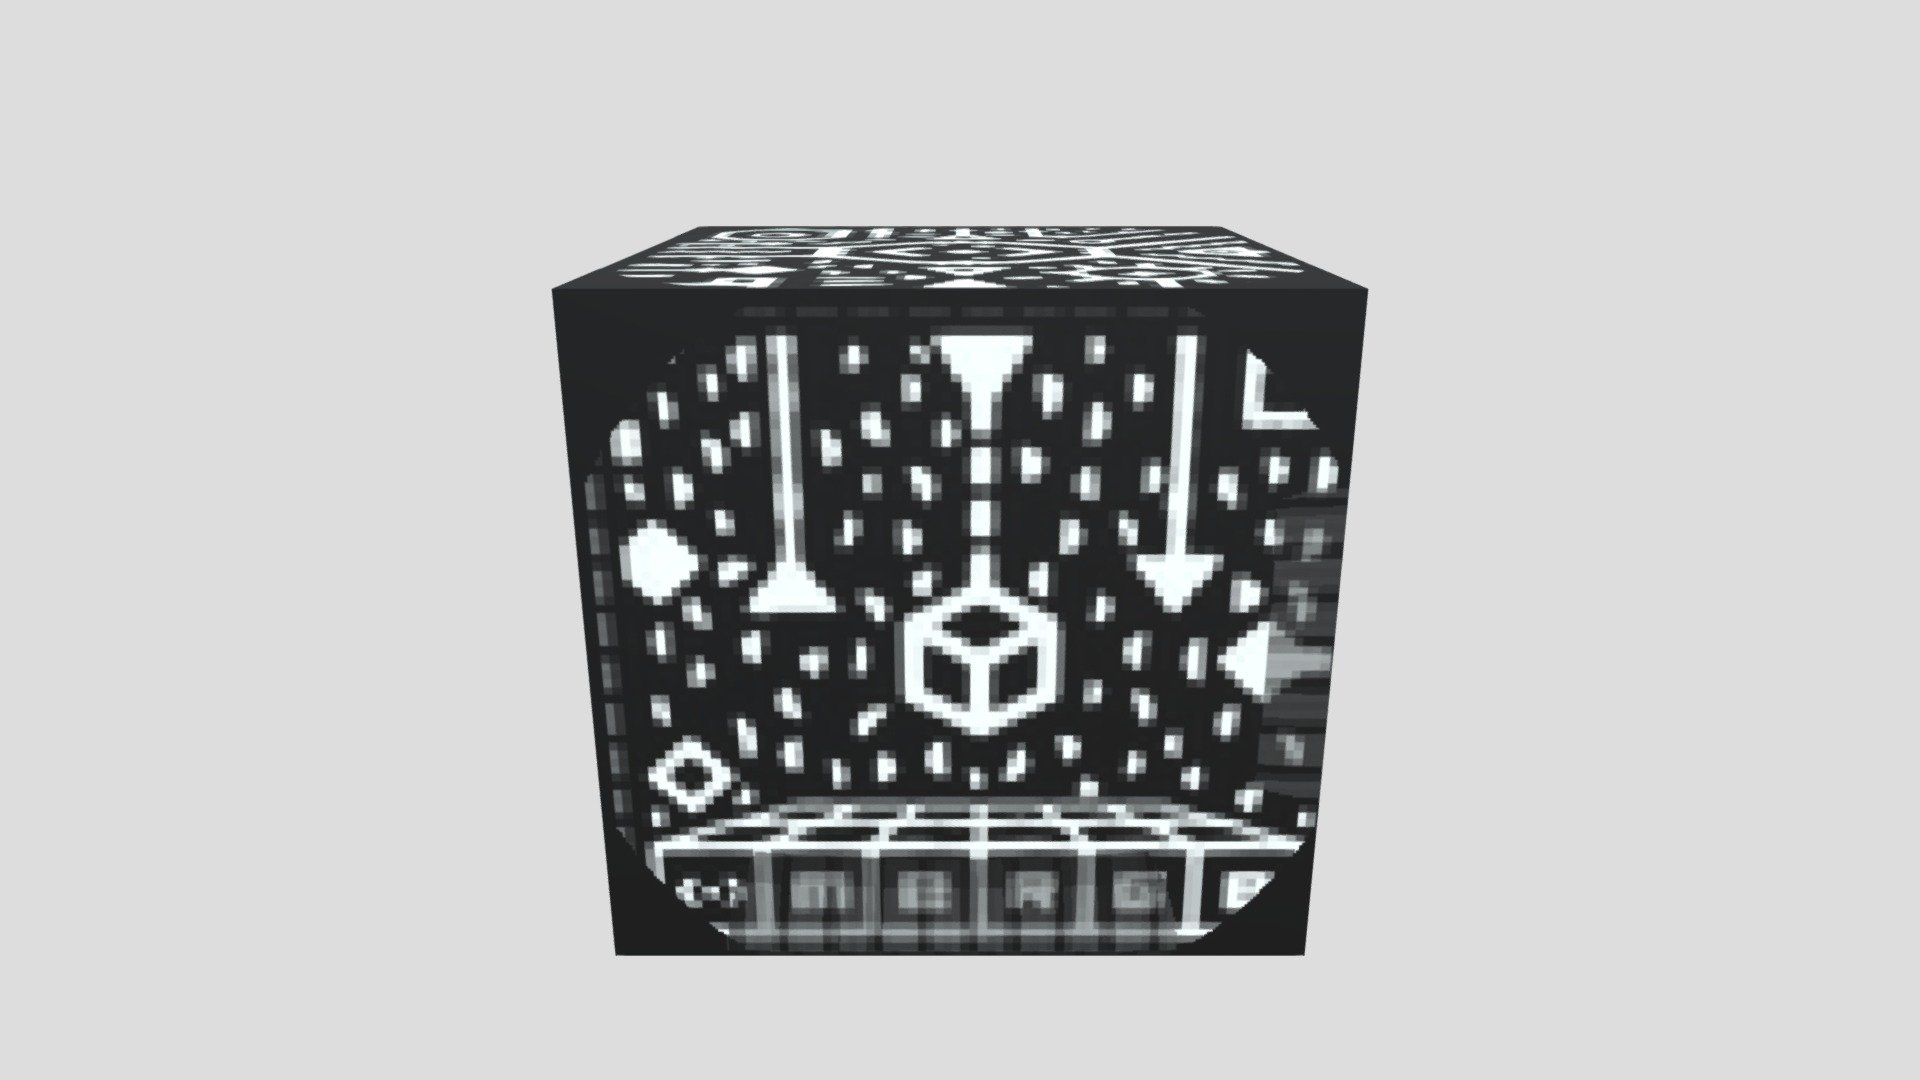 Merge Cube Printable